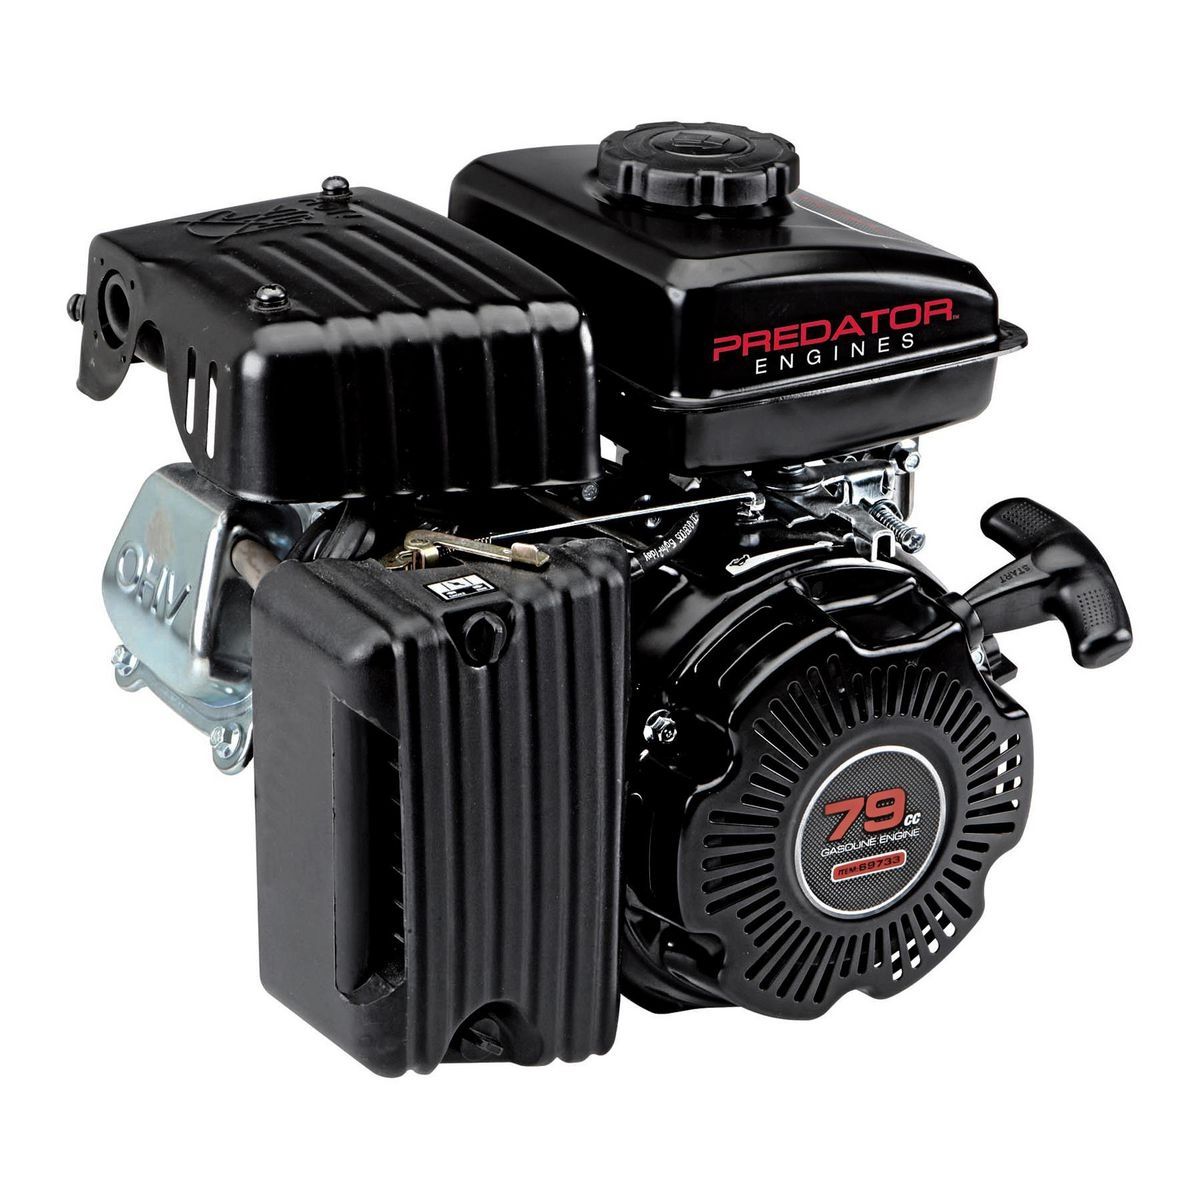 PREDATOR 3 HP (79cc) OHV Horizontal Shaft Gas Engine, EPA